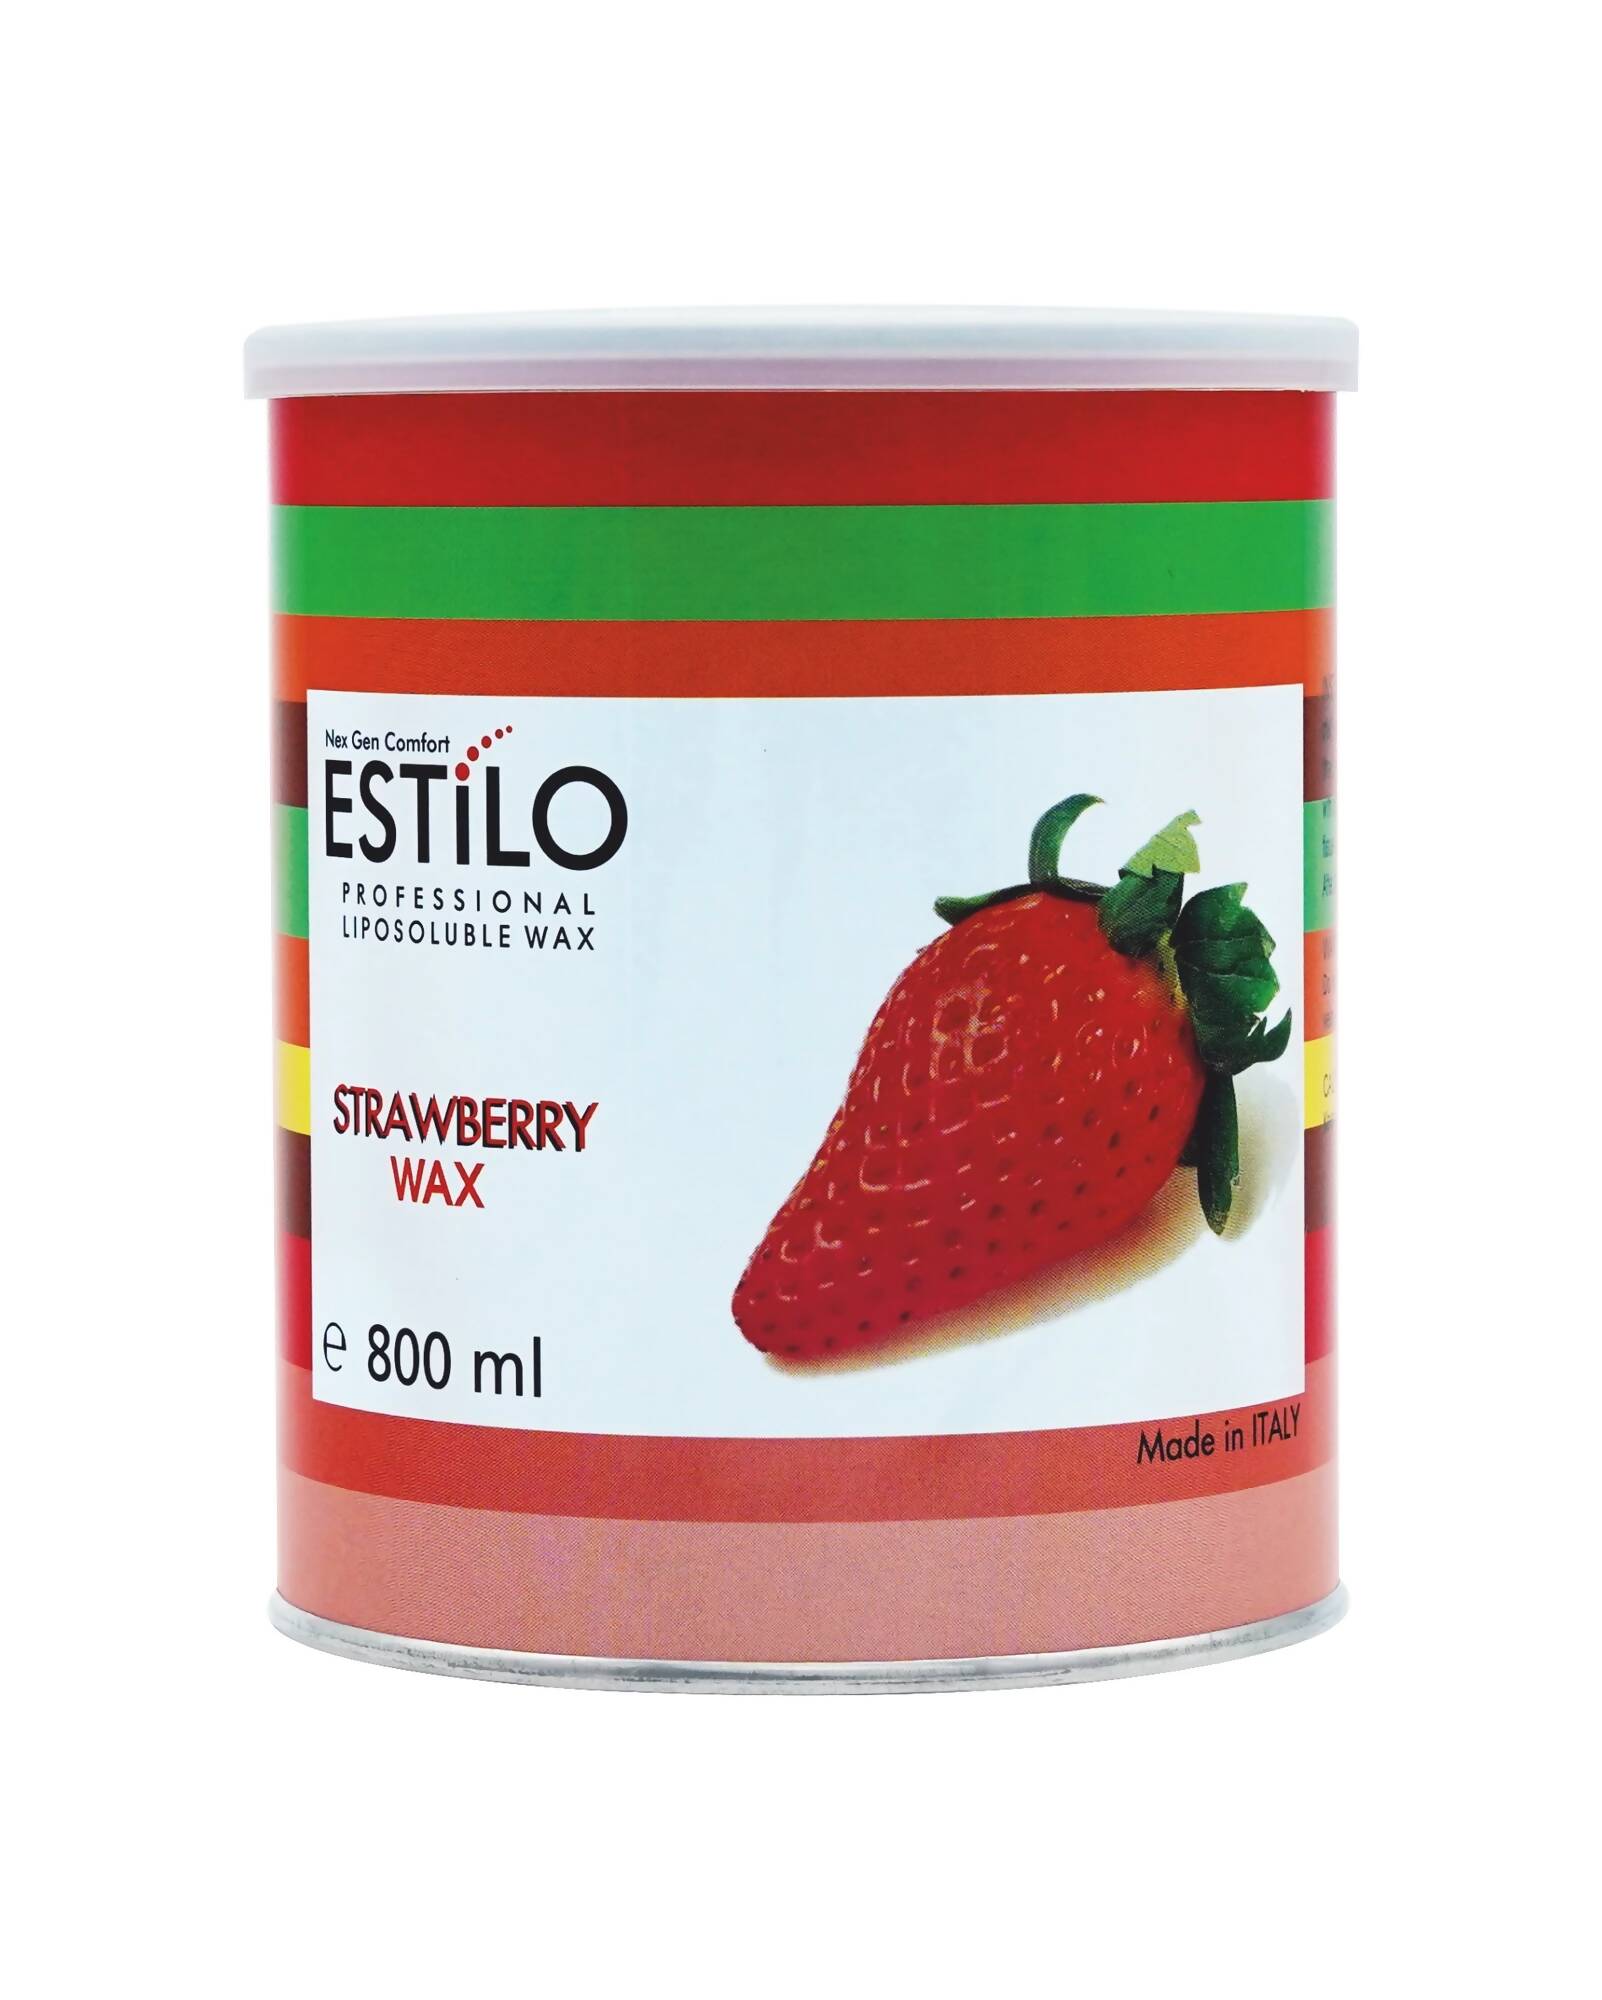 Estilo strawberry wax for hair removal